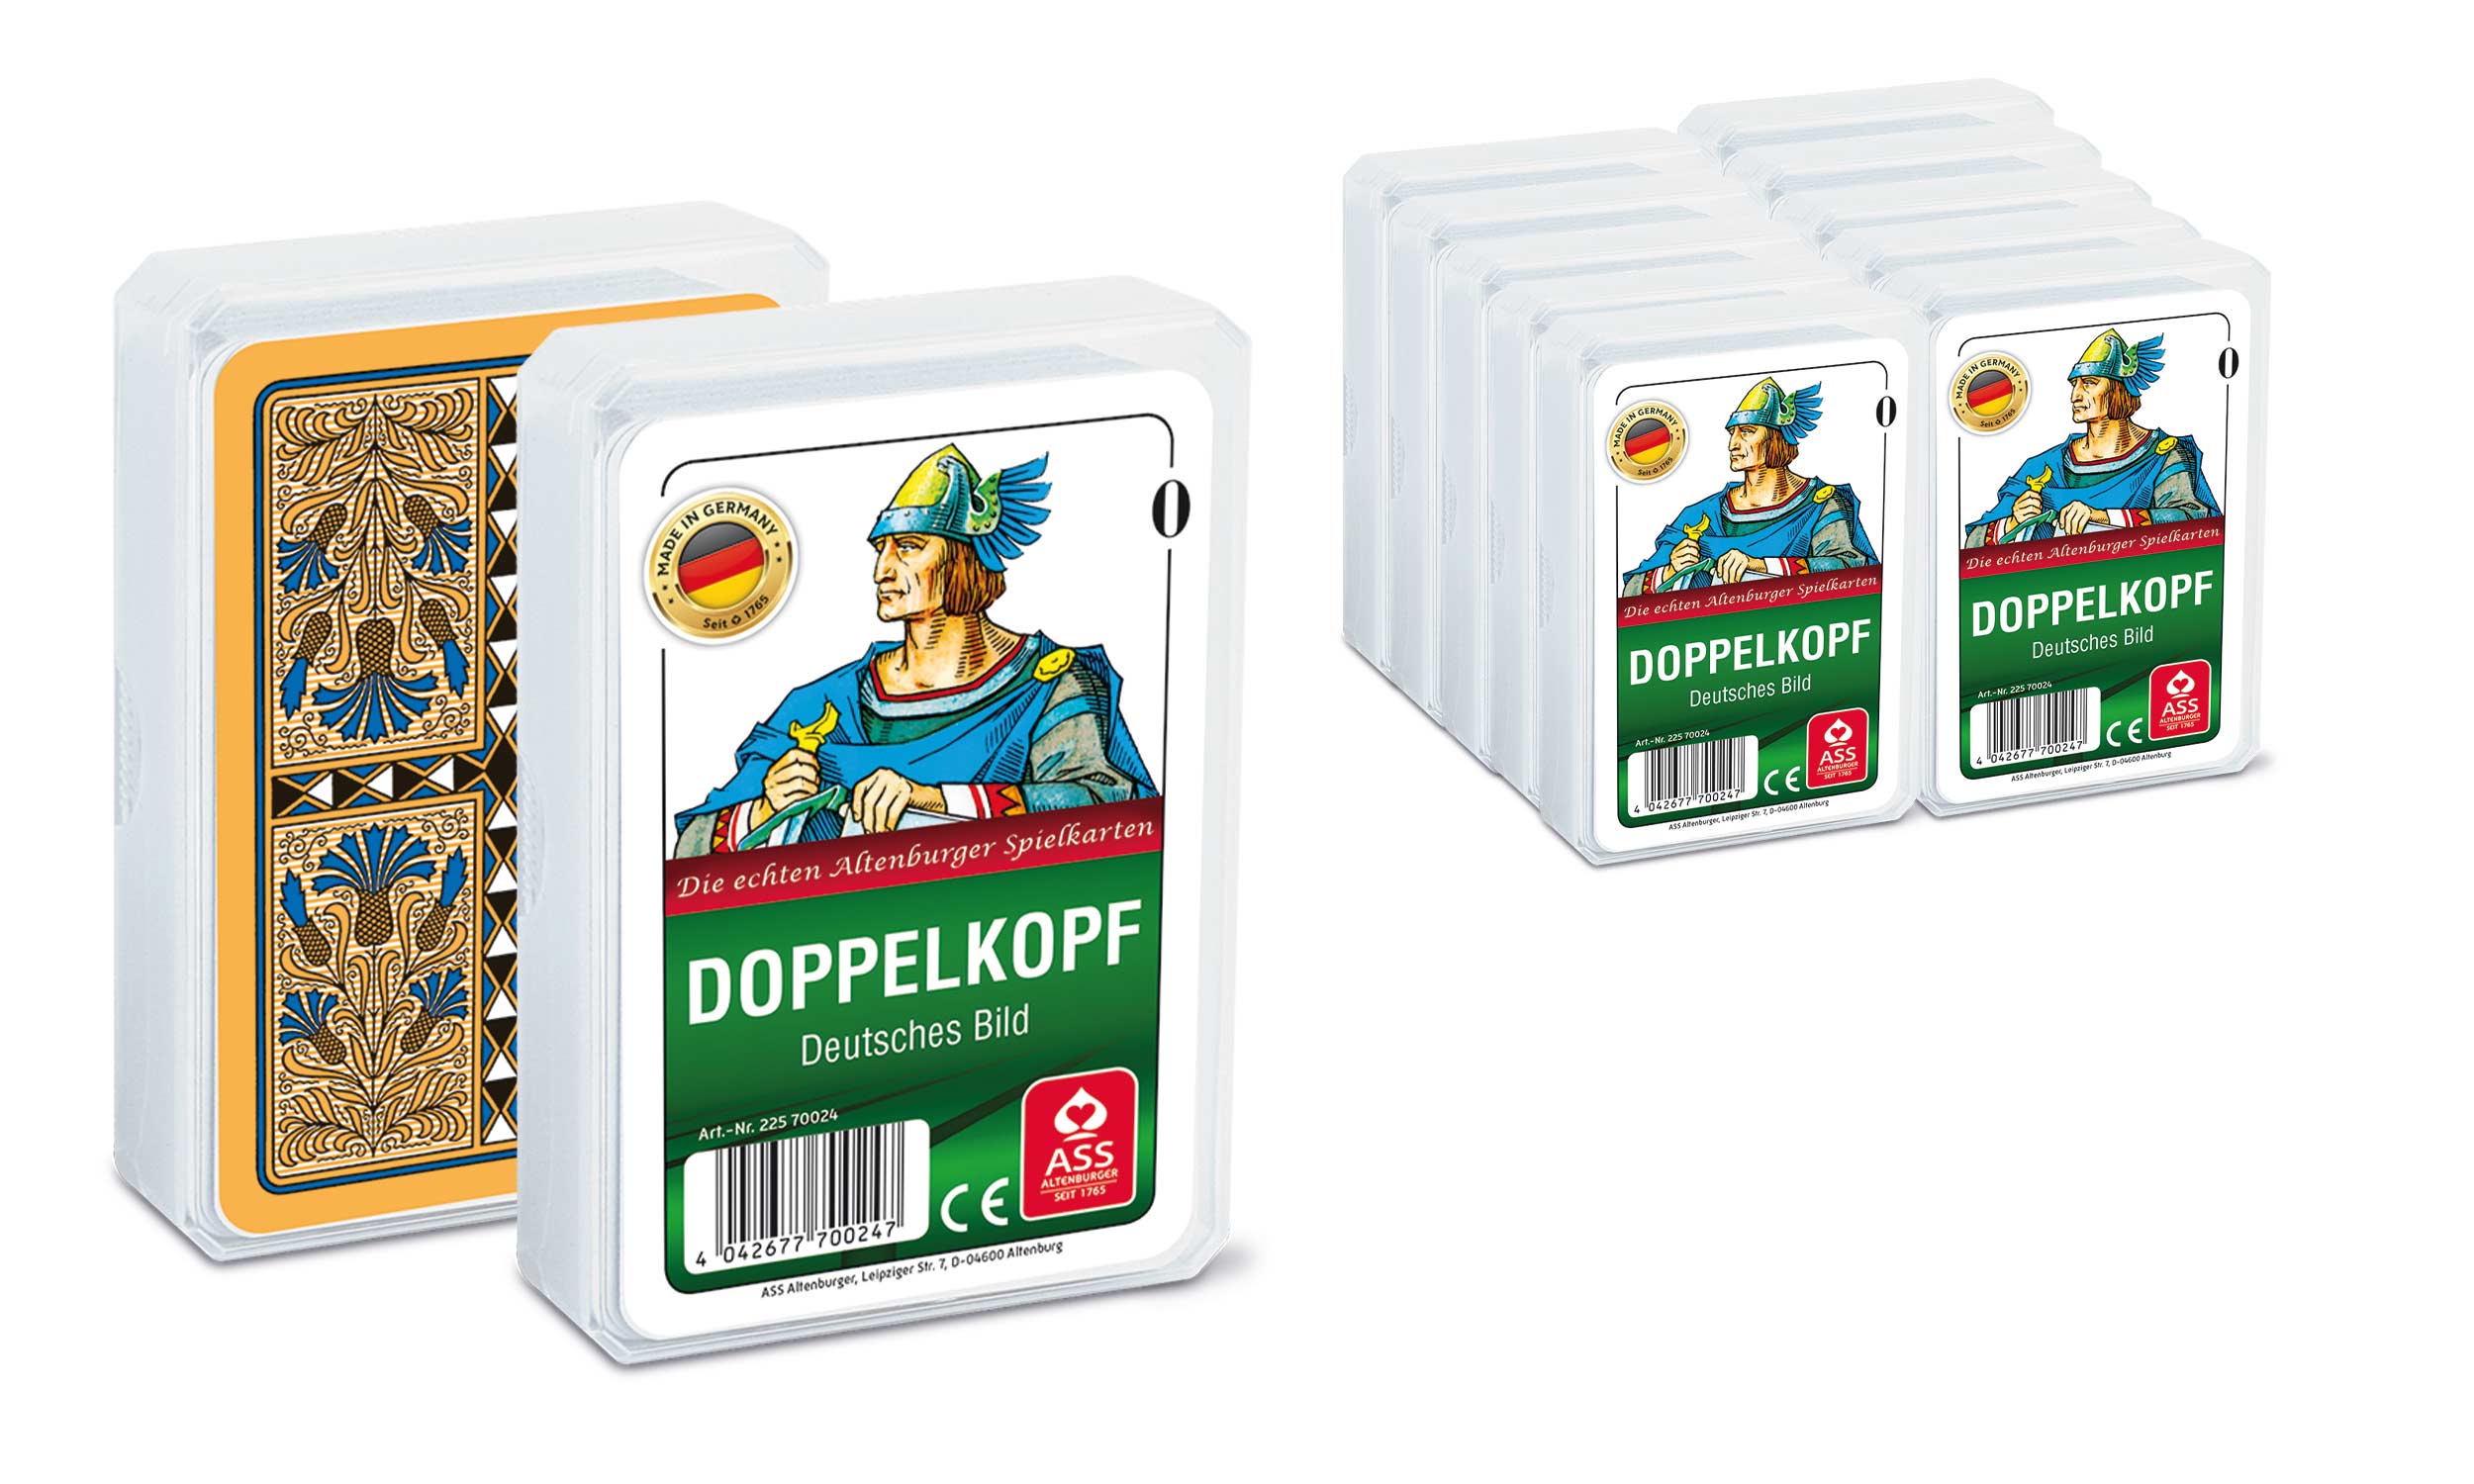 ASS, Doppelkopf, german image, in plastic case, pack of 10